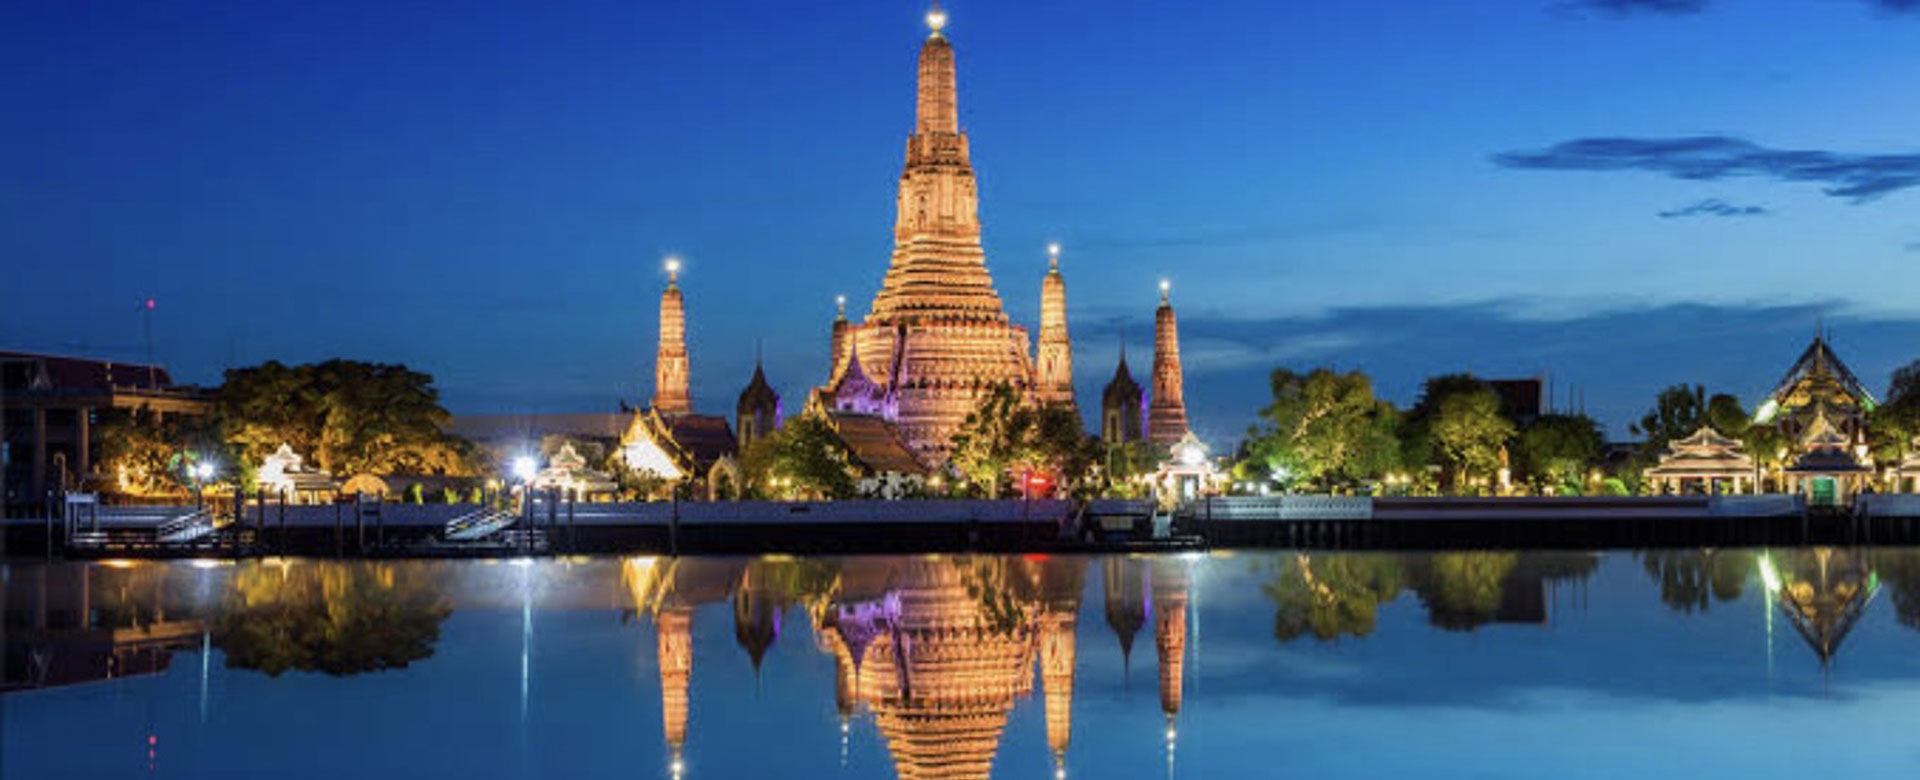 Wat Phra Kaew in Bangkok, attract you